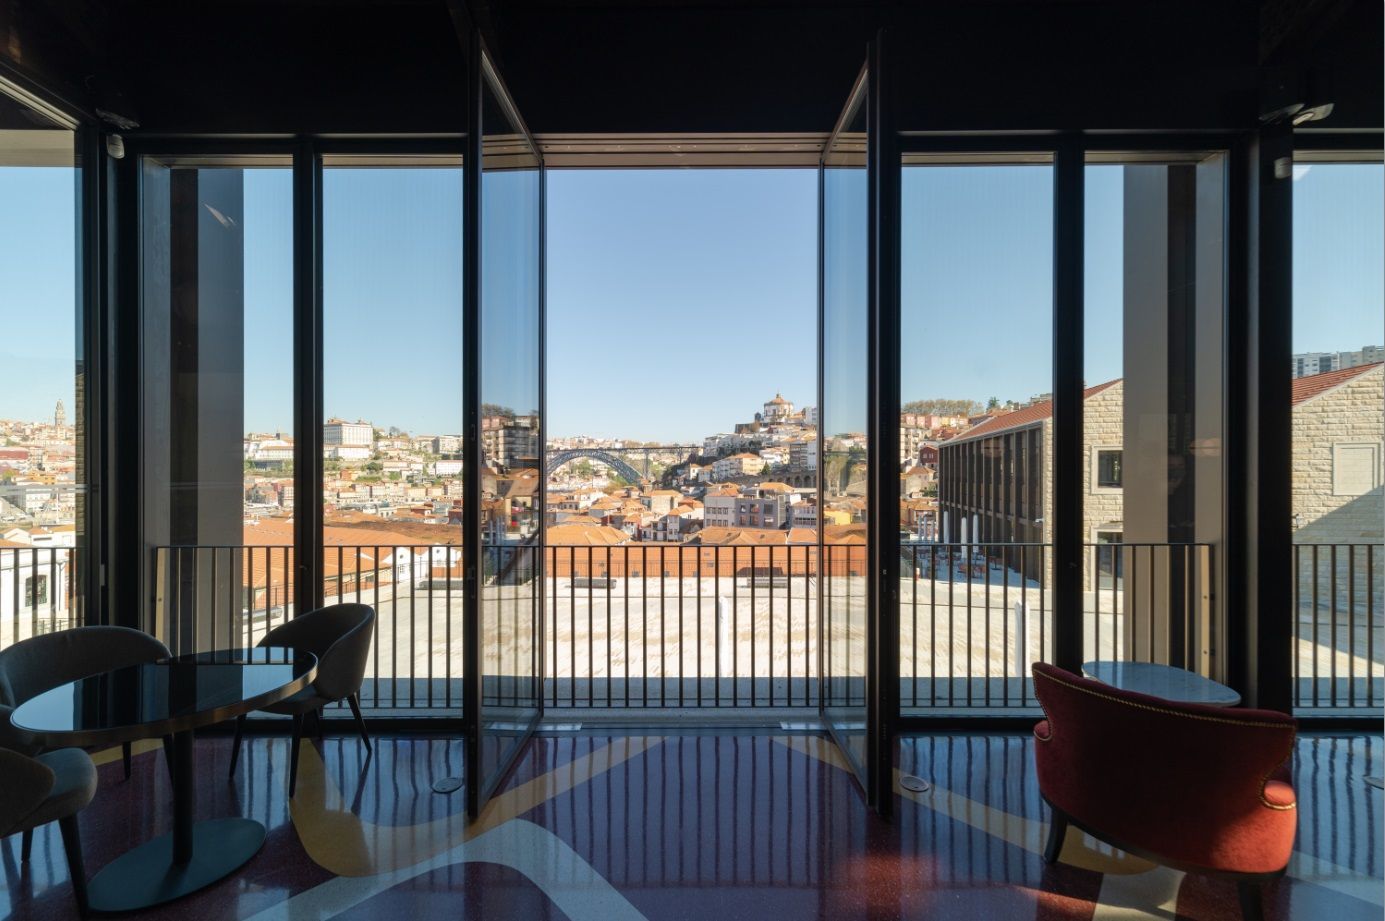 City view through modern minimalist window frame in a building